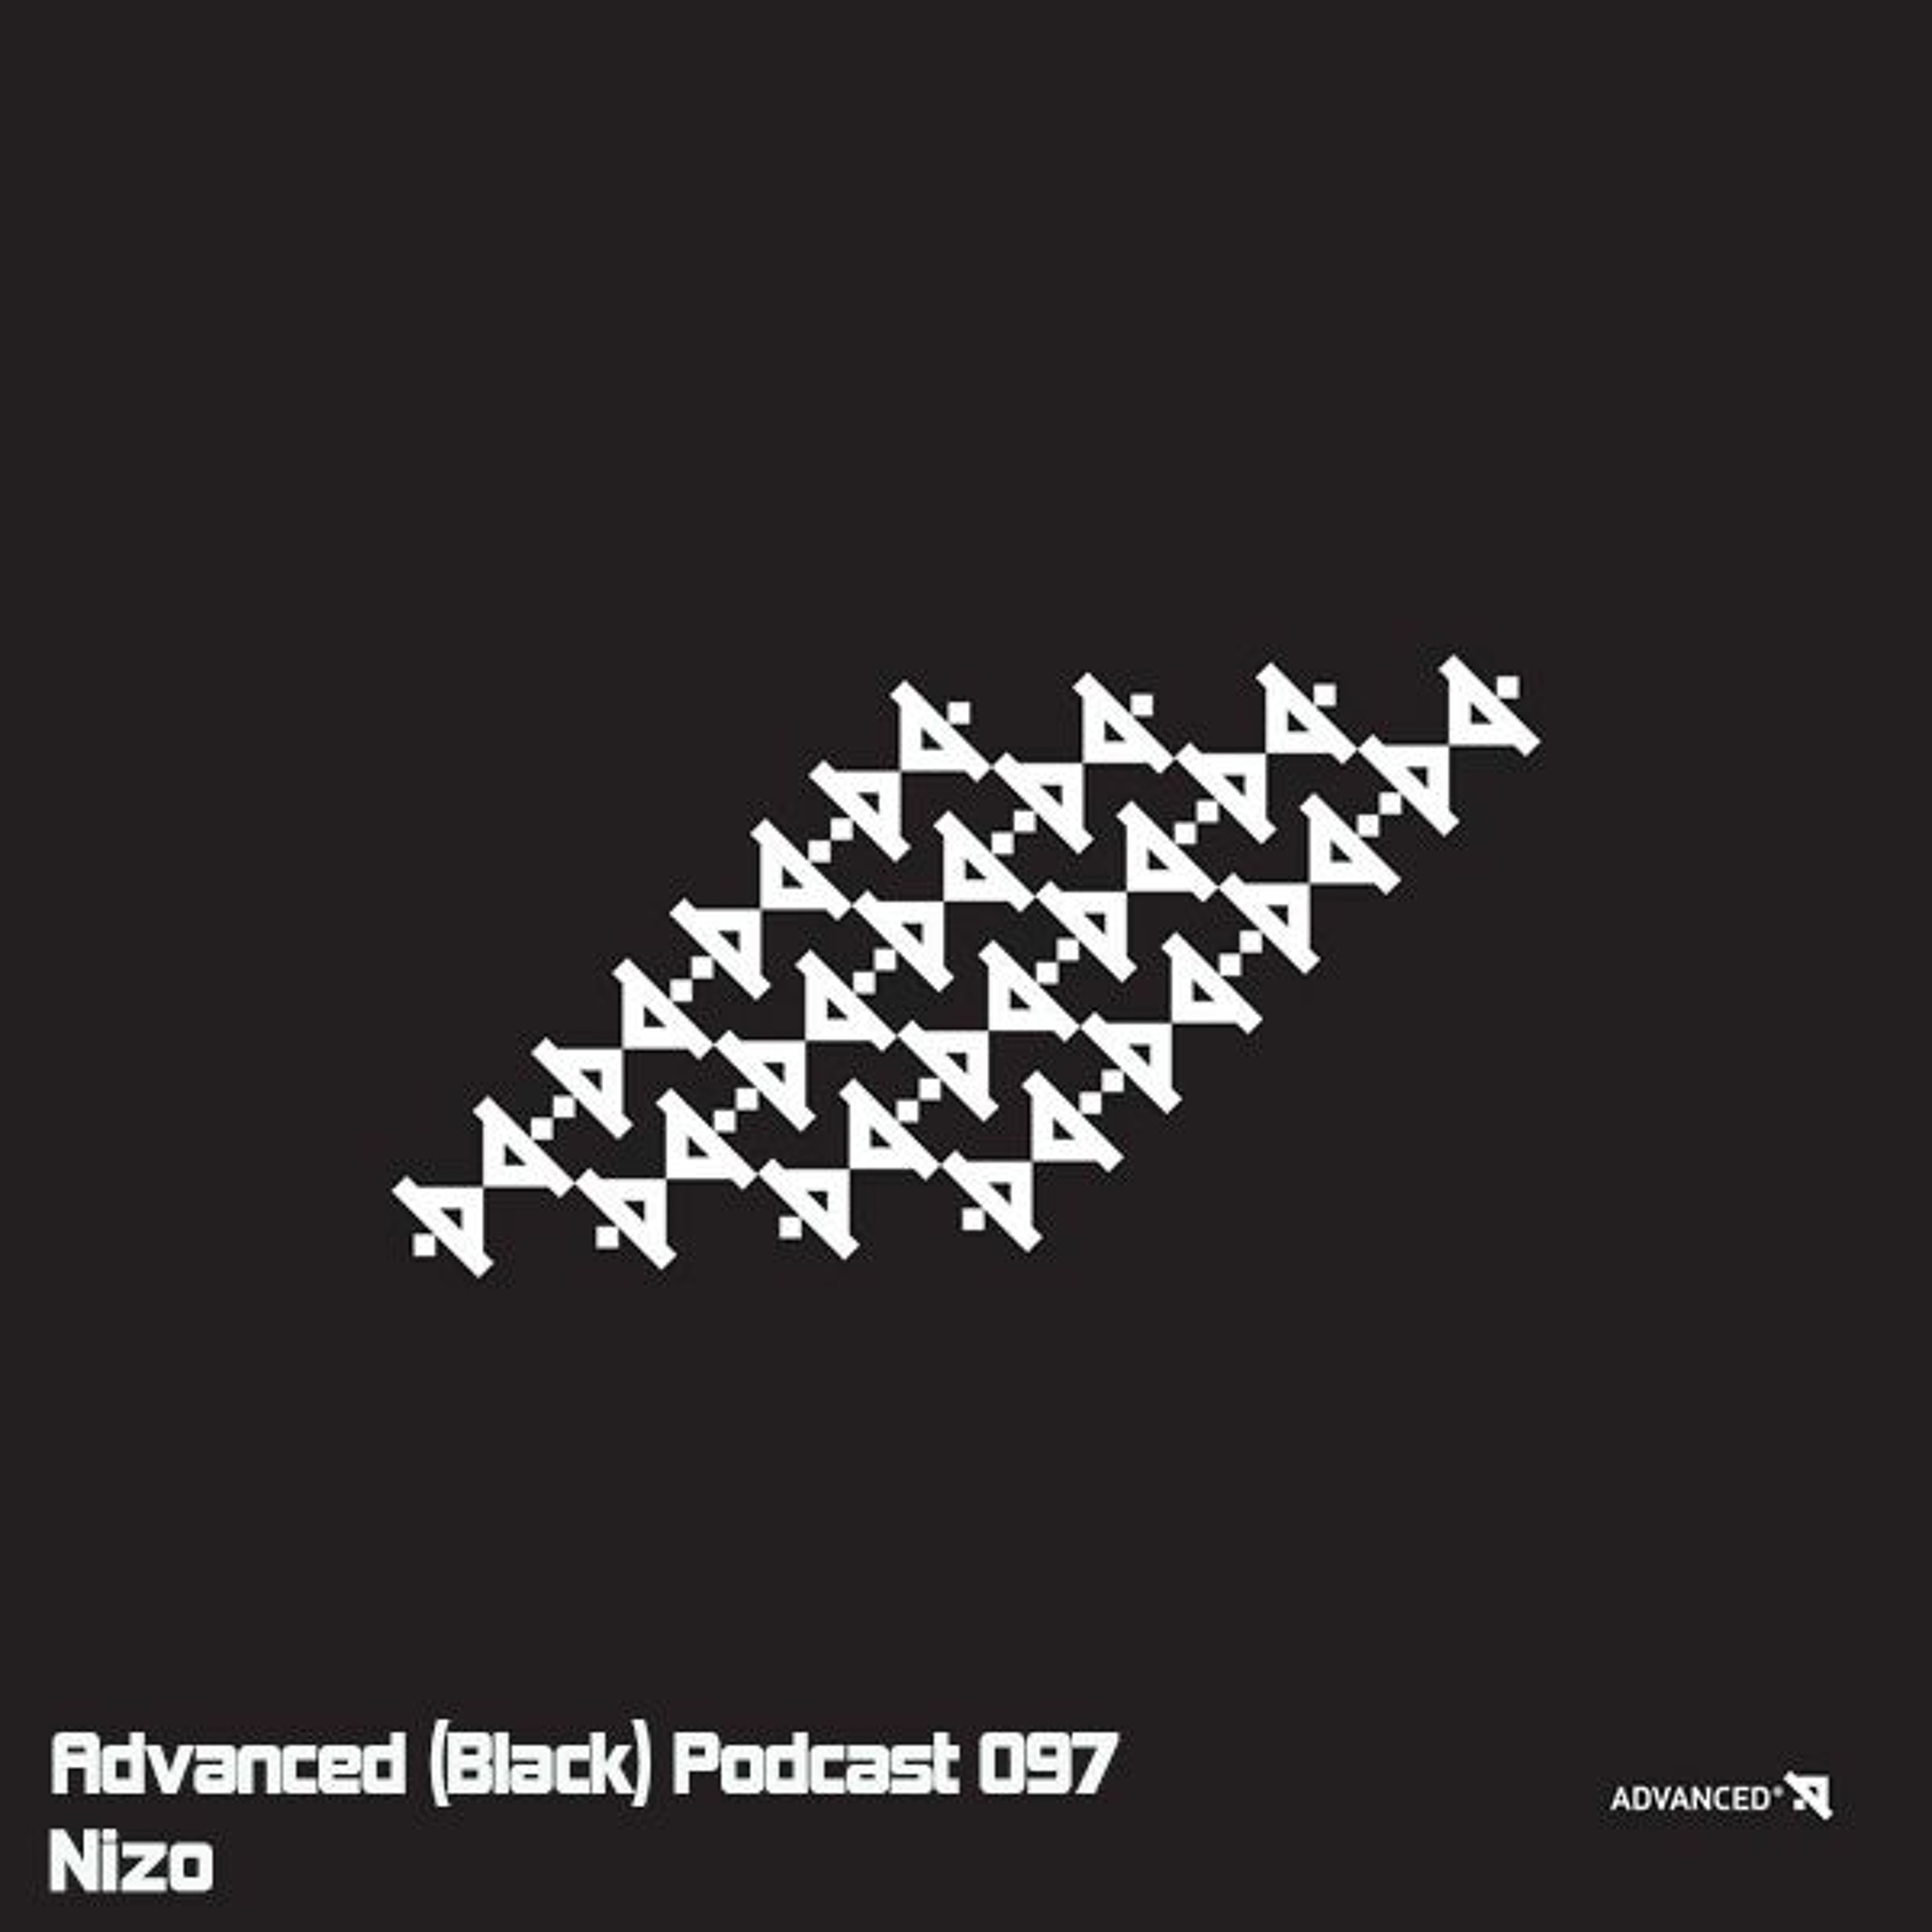 Advanced (Black) Podcast 097 with Nizo